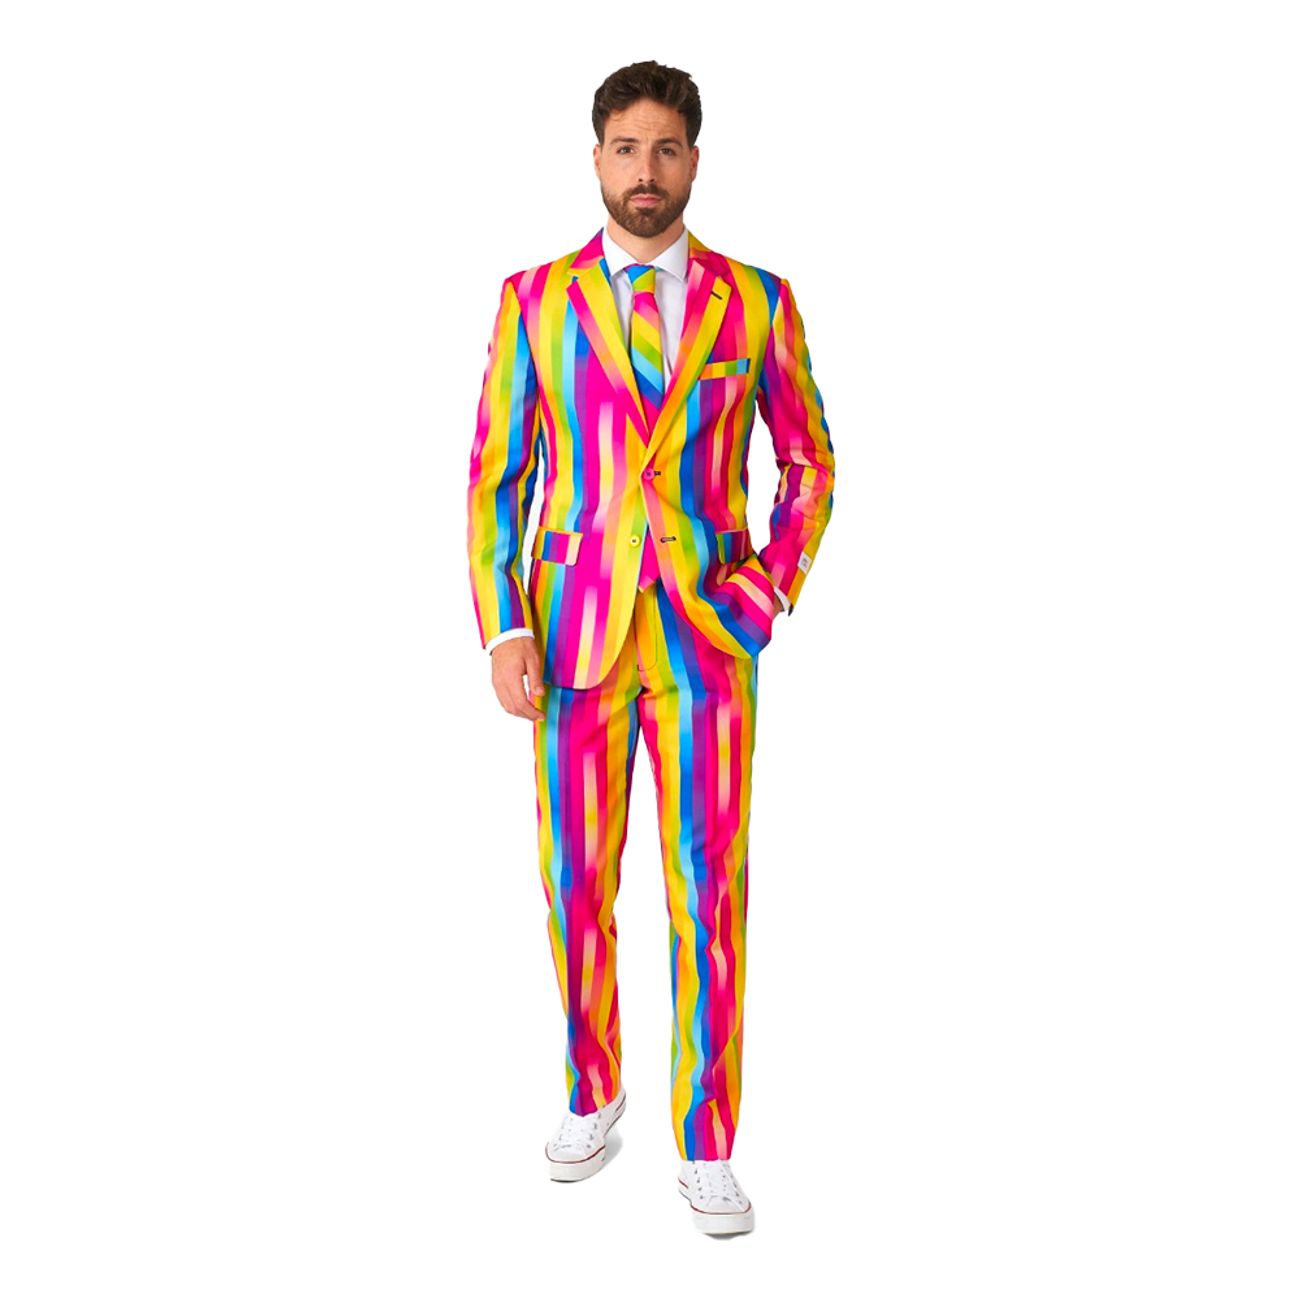 opposuits-rainbow-glaze-kostym-87097-1